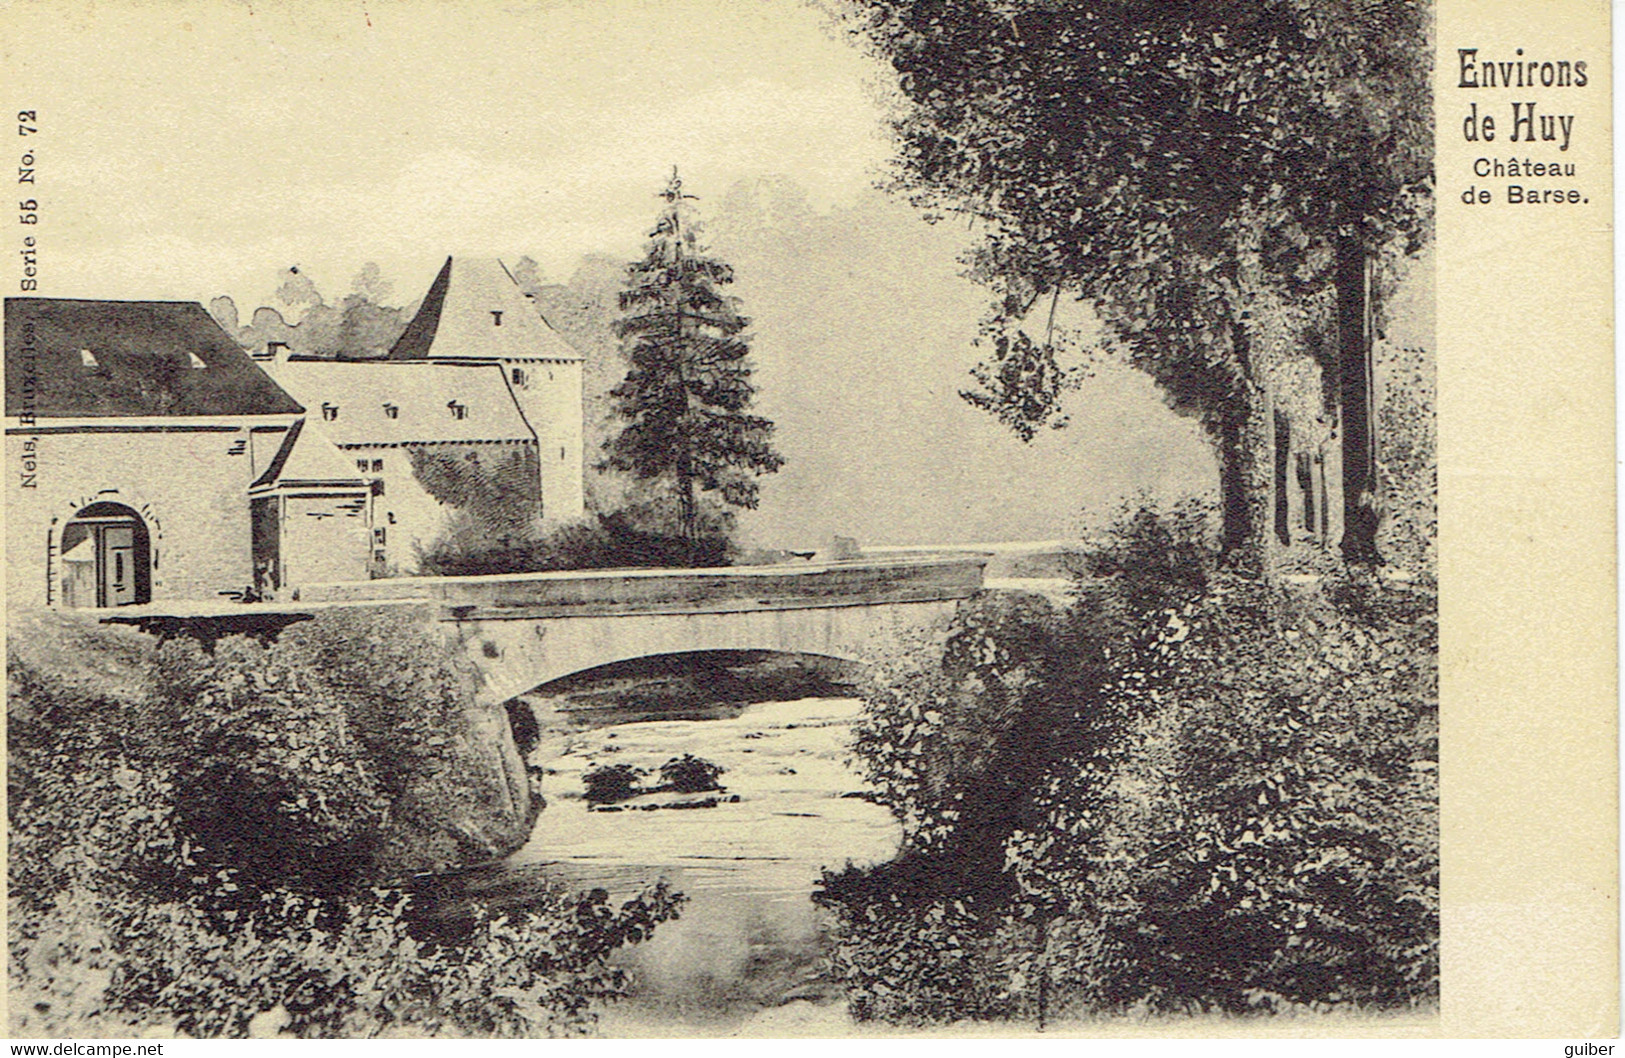 Environs De Huy Chateau De Barse - Hoei